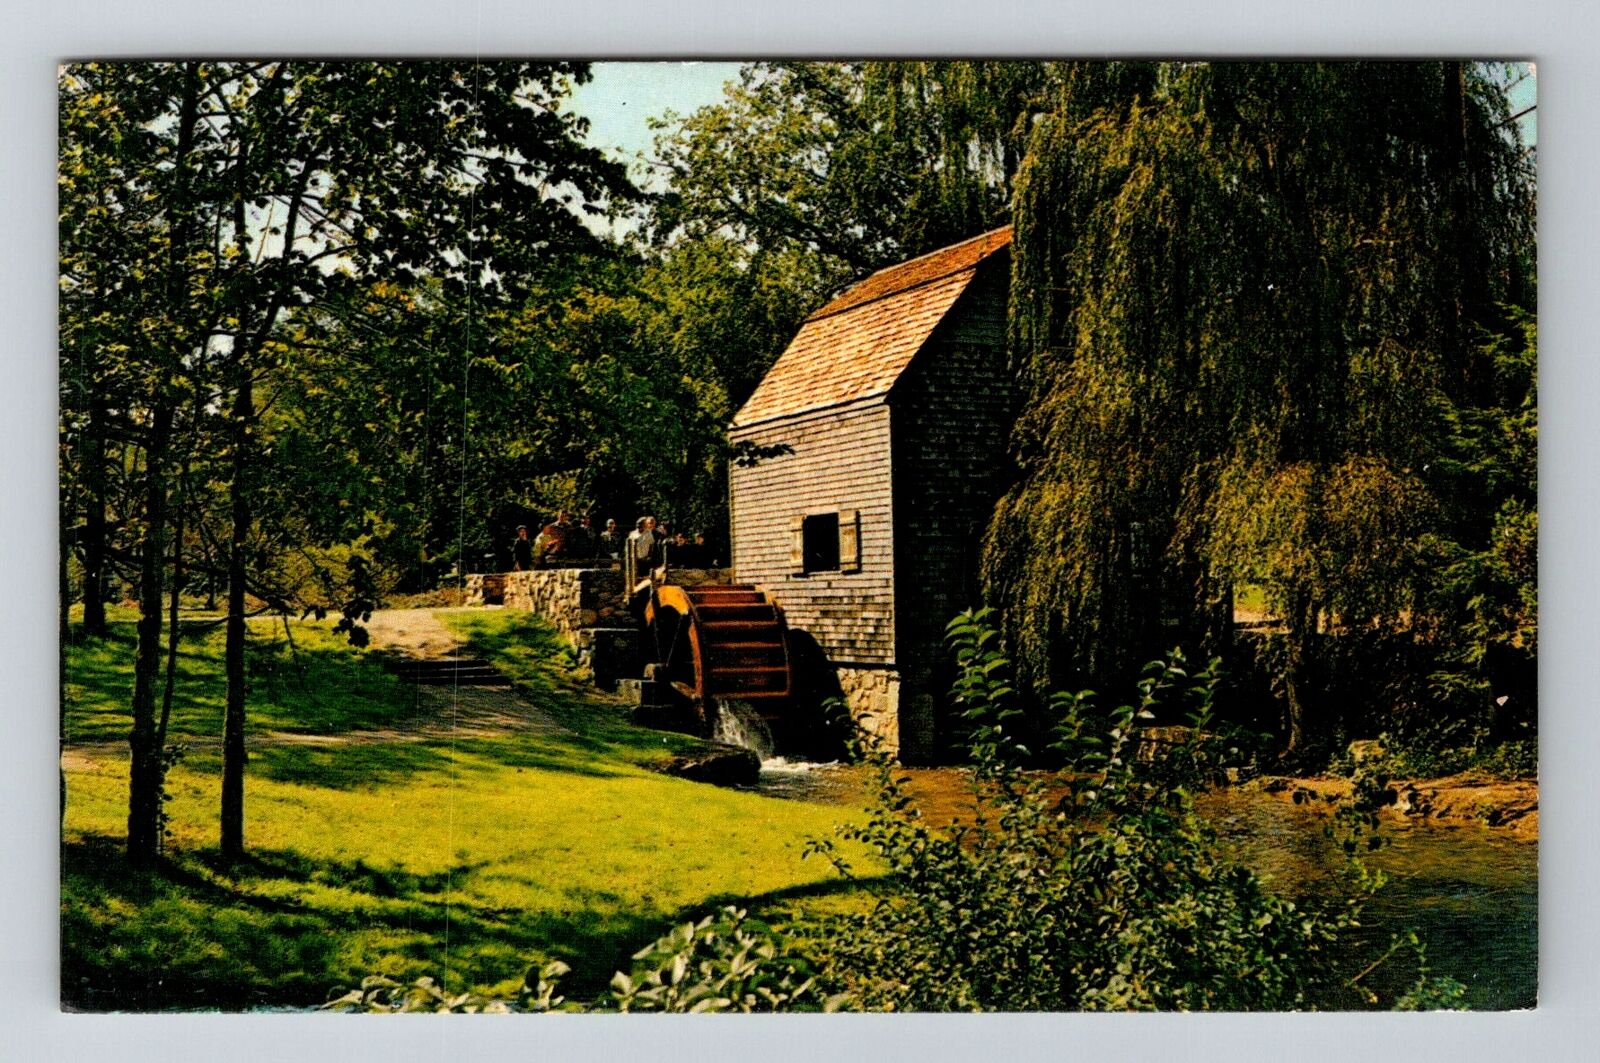 Cape Cod MA-Massachusetts, Historical Dexter Grist Mill c1978 Vintage Postcard